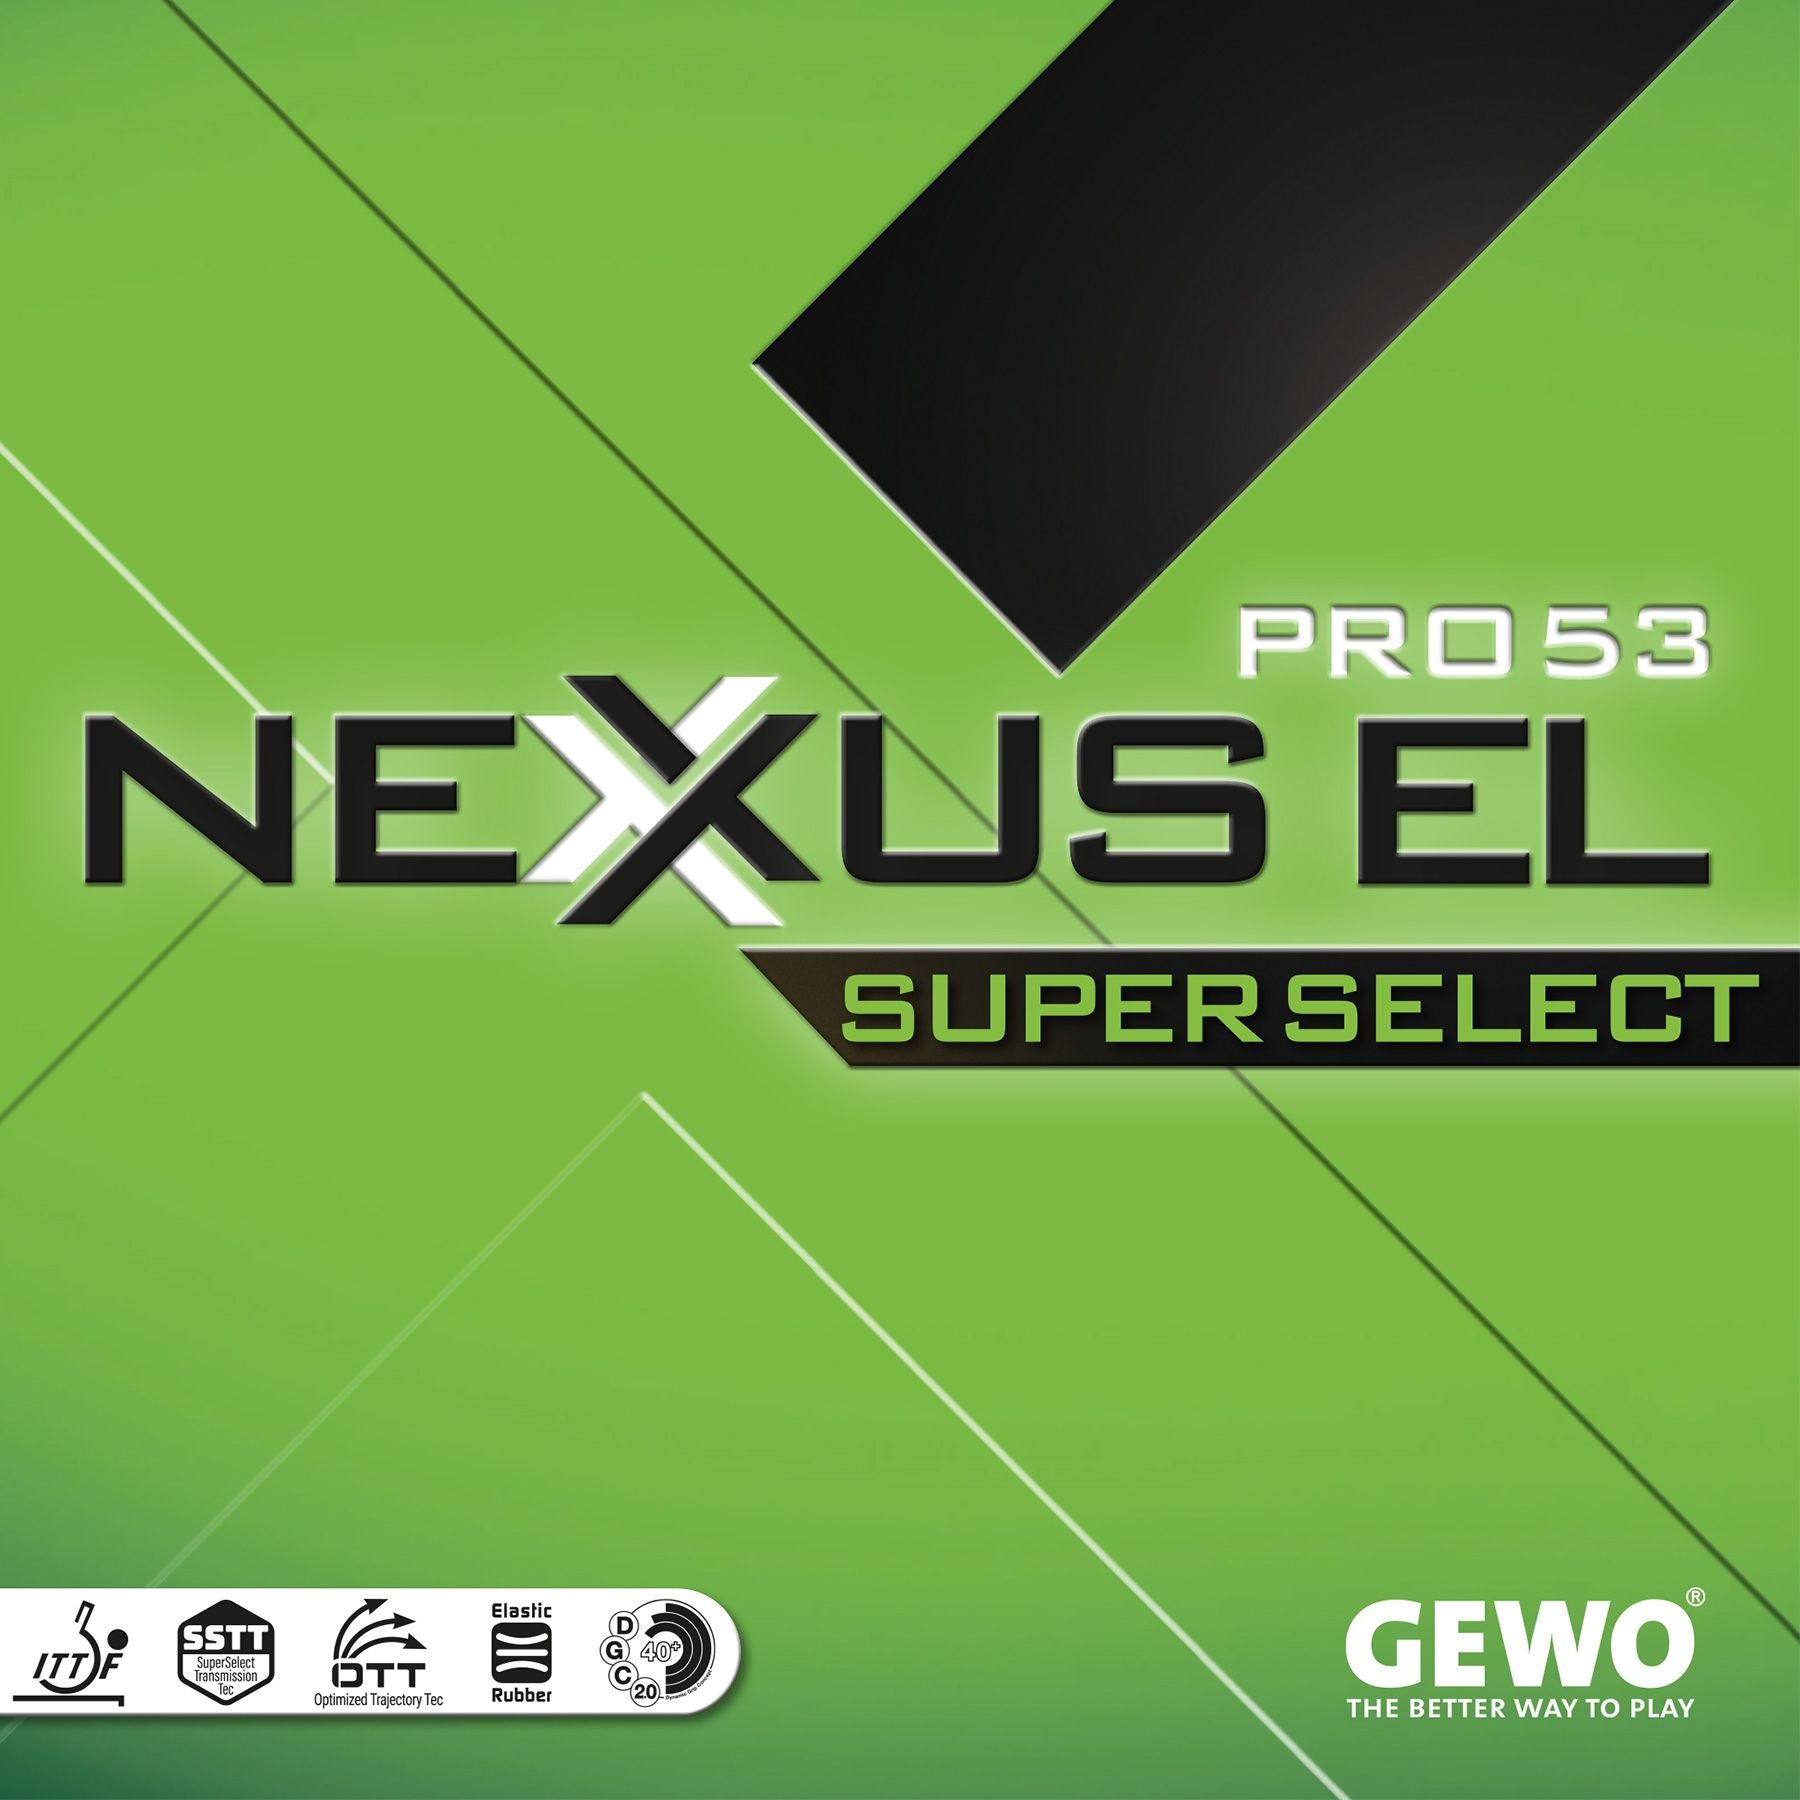 GEWO Nexxus EL Pro 53 SuperSelect - Table Tennis Rubber